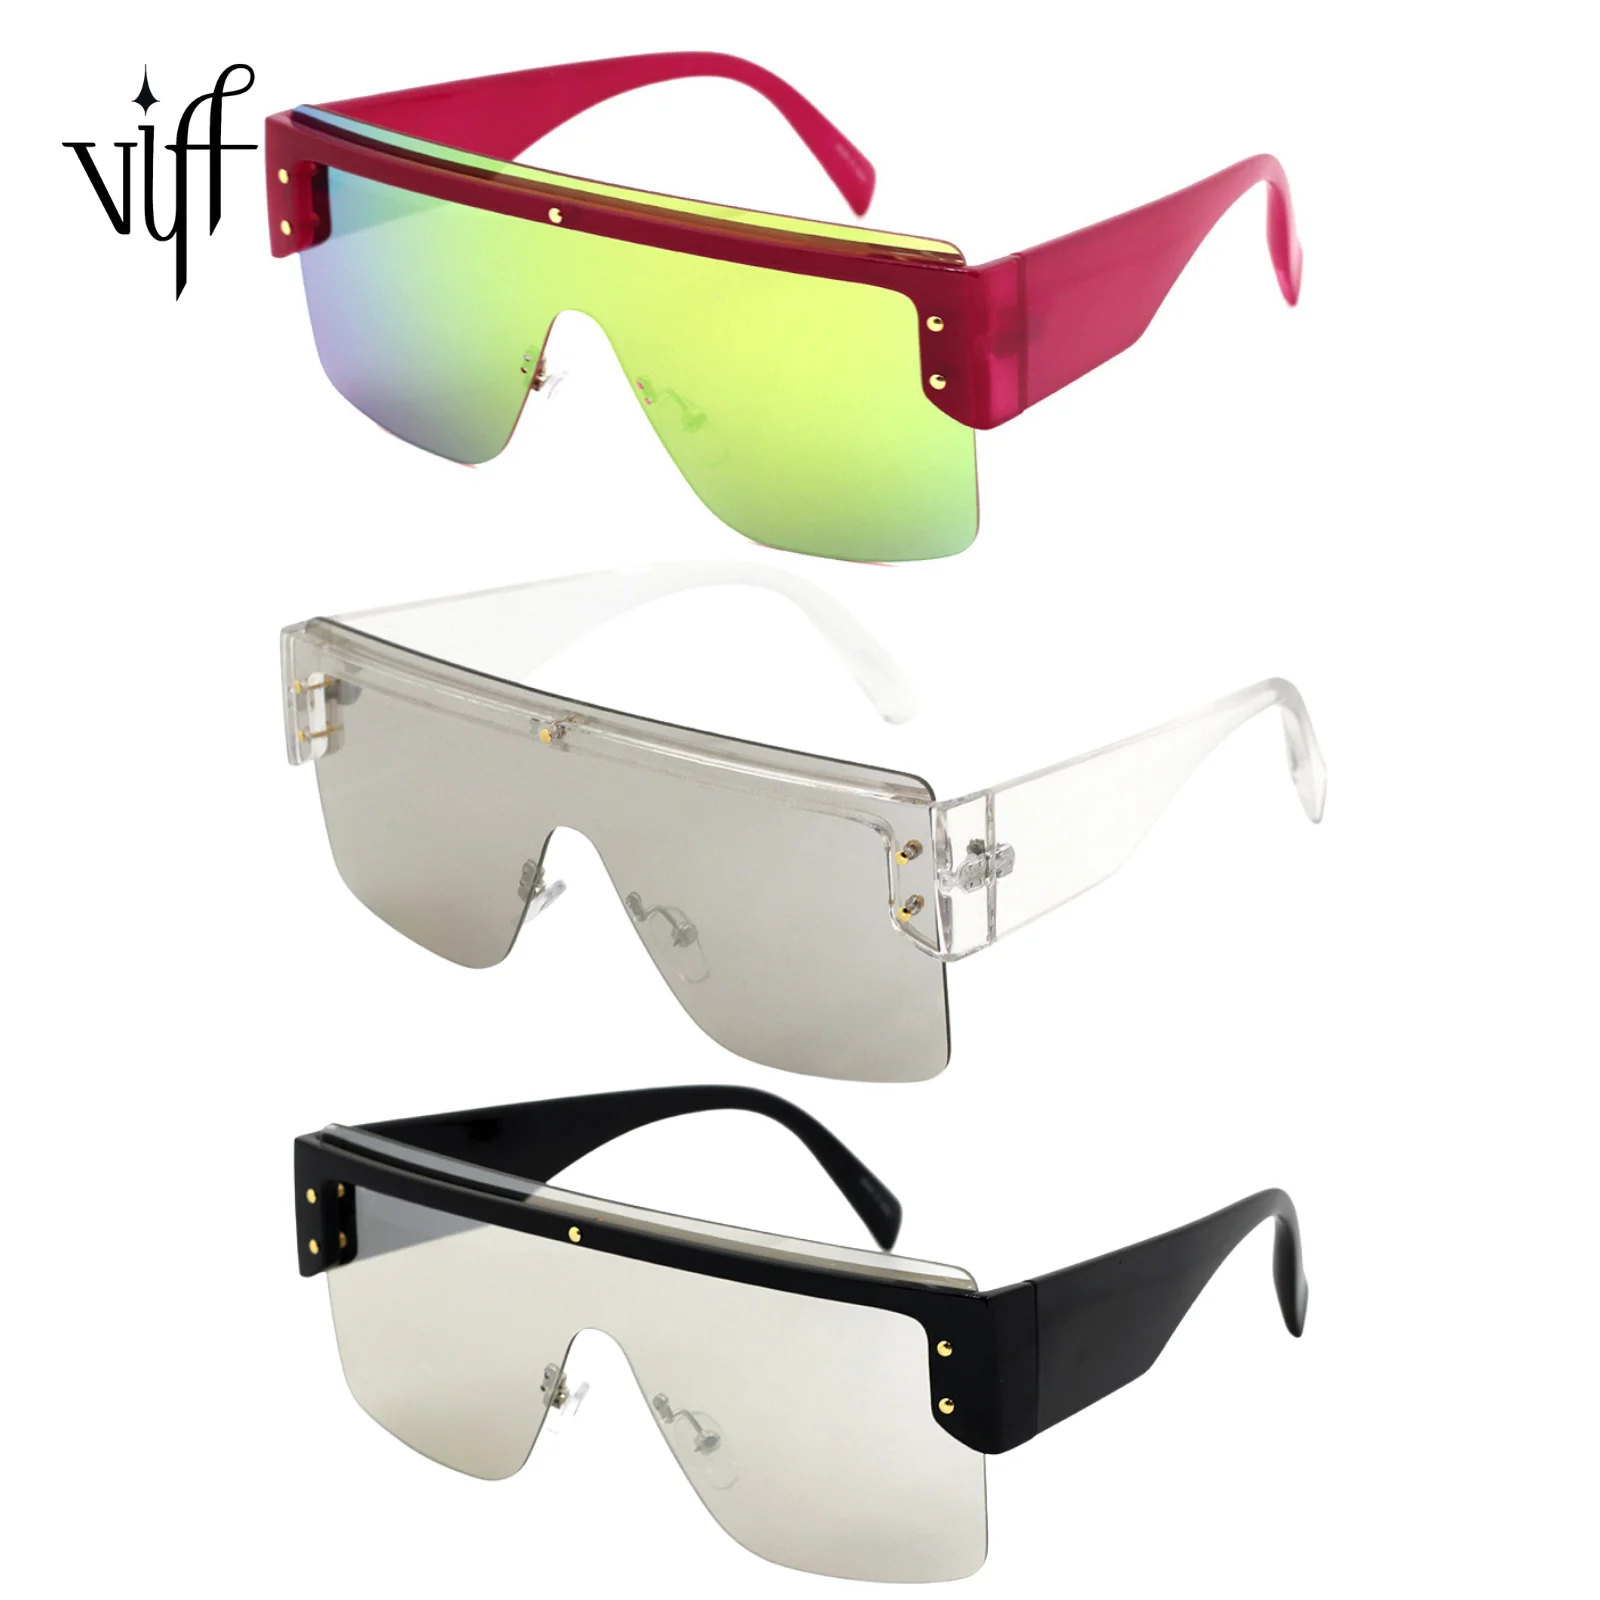 

VIFF HP20608 Vintage Lens Sun Glasses River Hot Amazon Seller Chinese Manufacturer Women Oversize One Piece Lens Sunglasses 2021